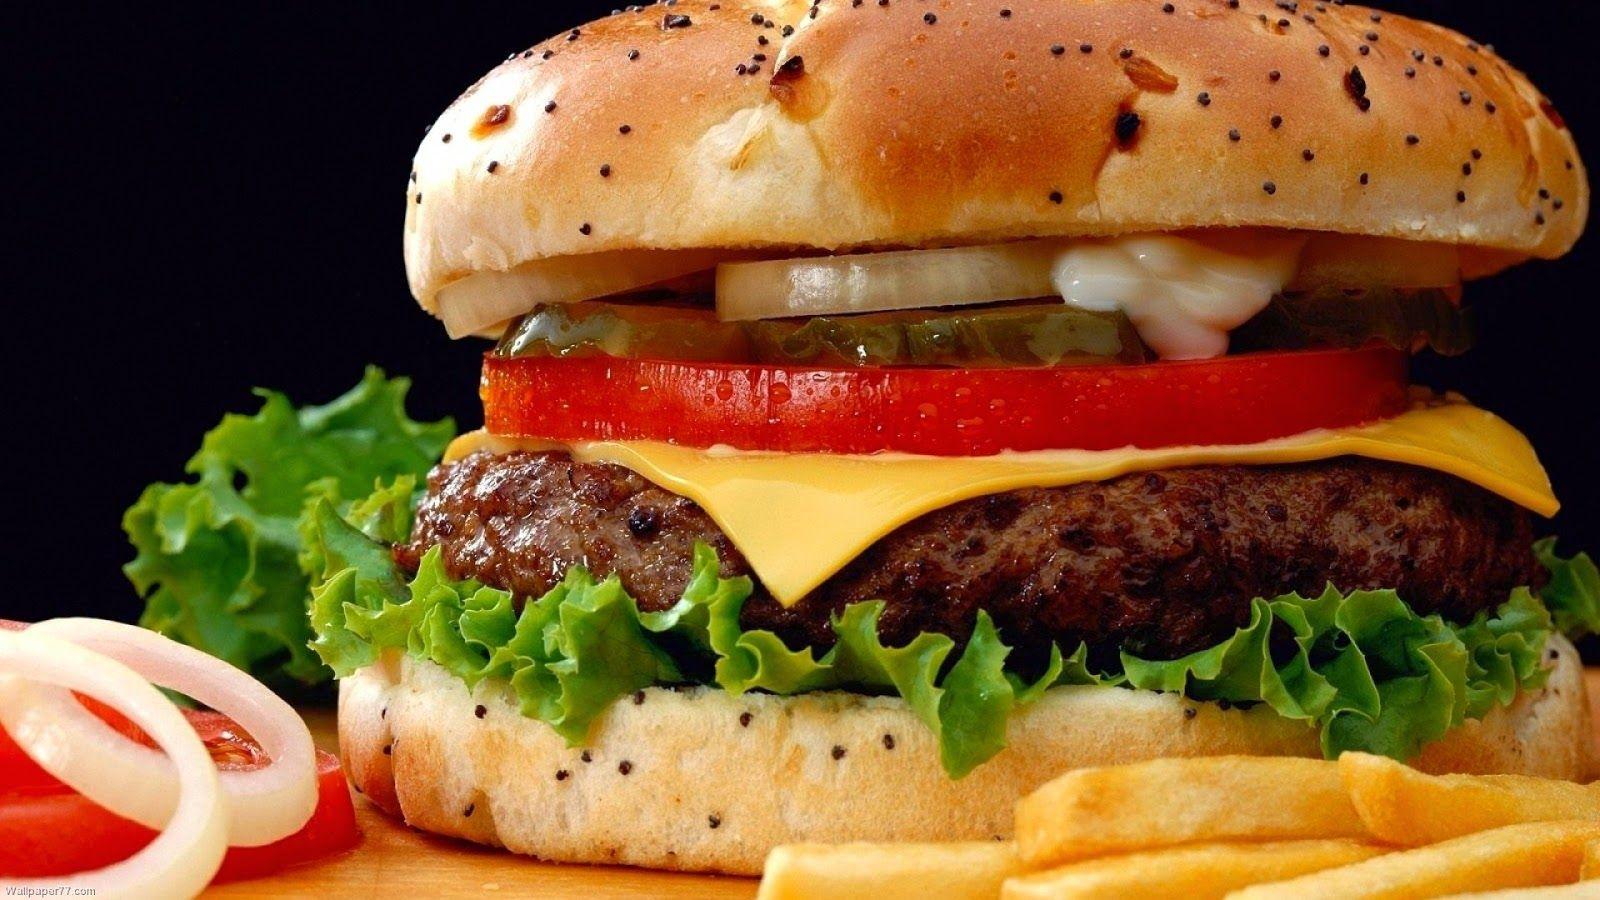 Delicious Food Wallpaper HD Resolution. Burger, fries